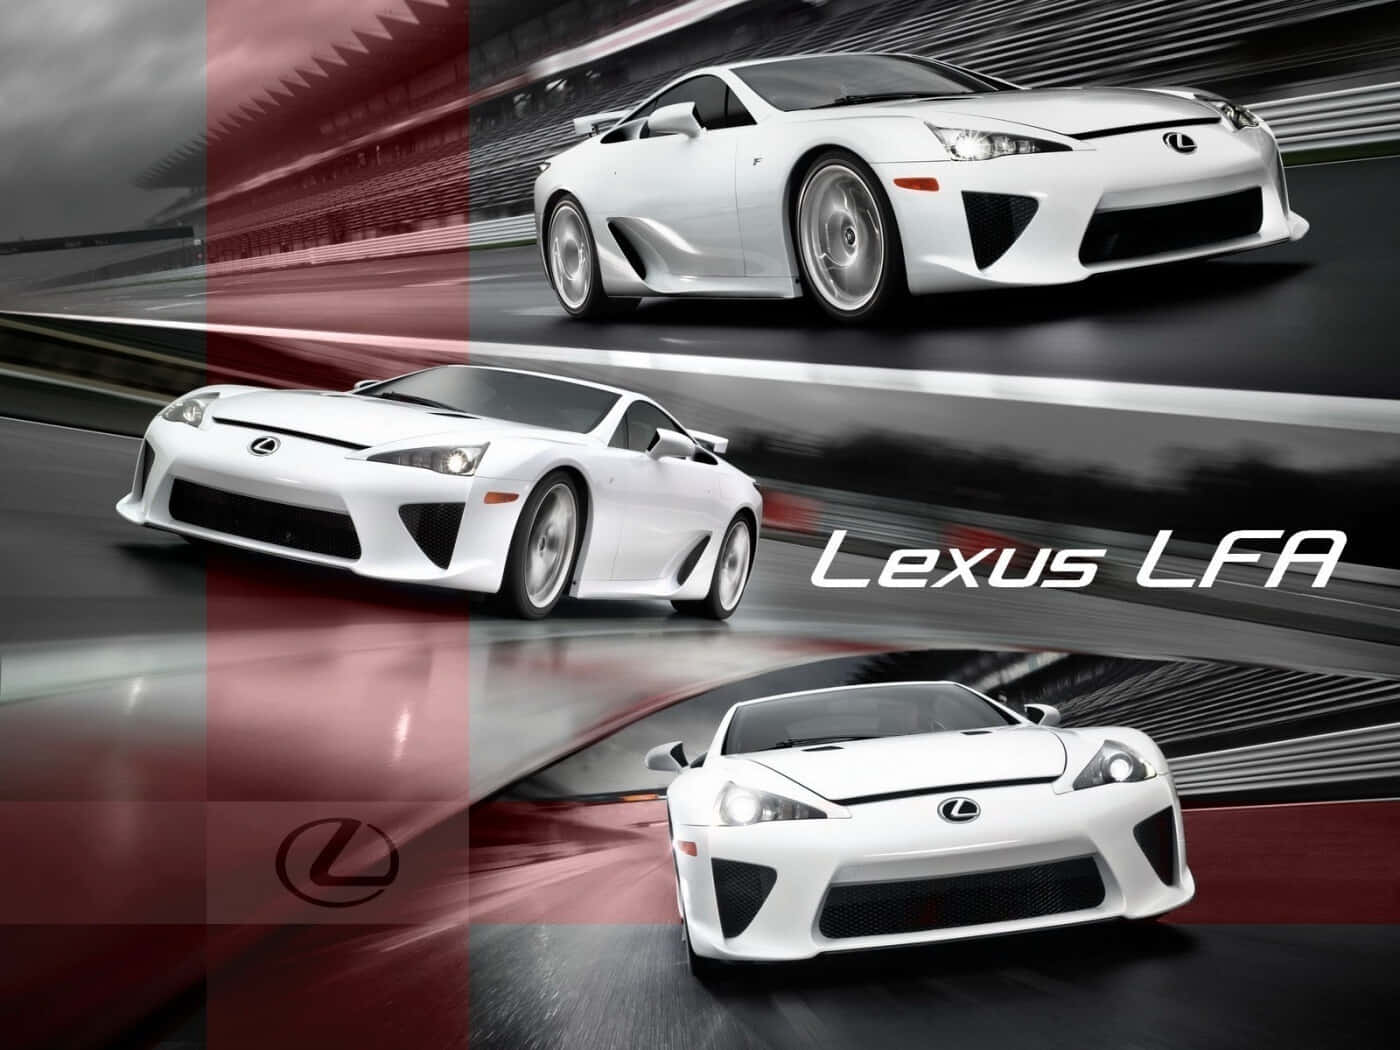 Caption: Sleek Lexus LFA sports car against a dramatic backdrop Wallpaper